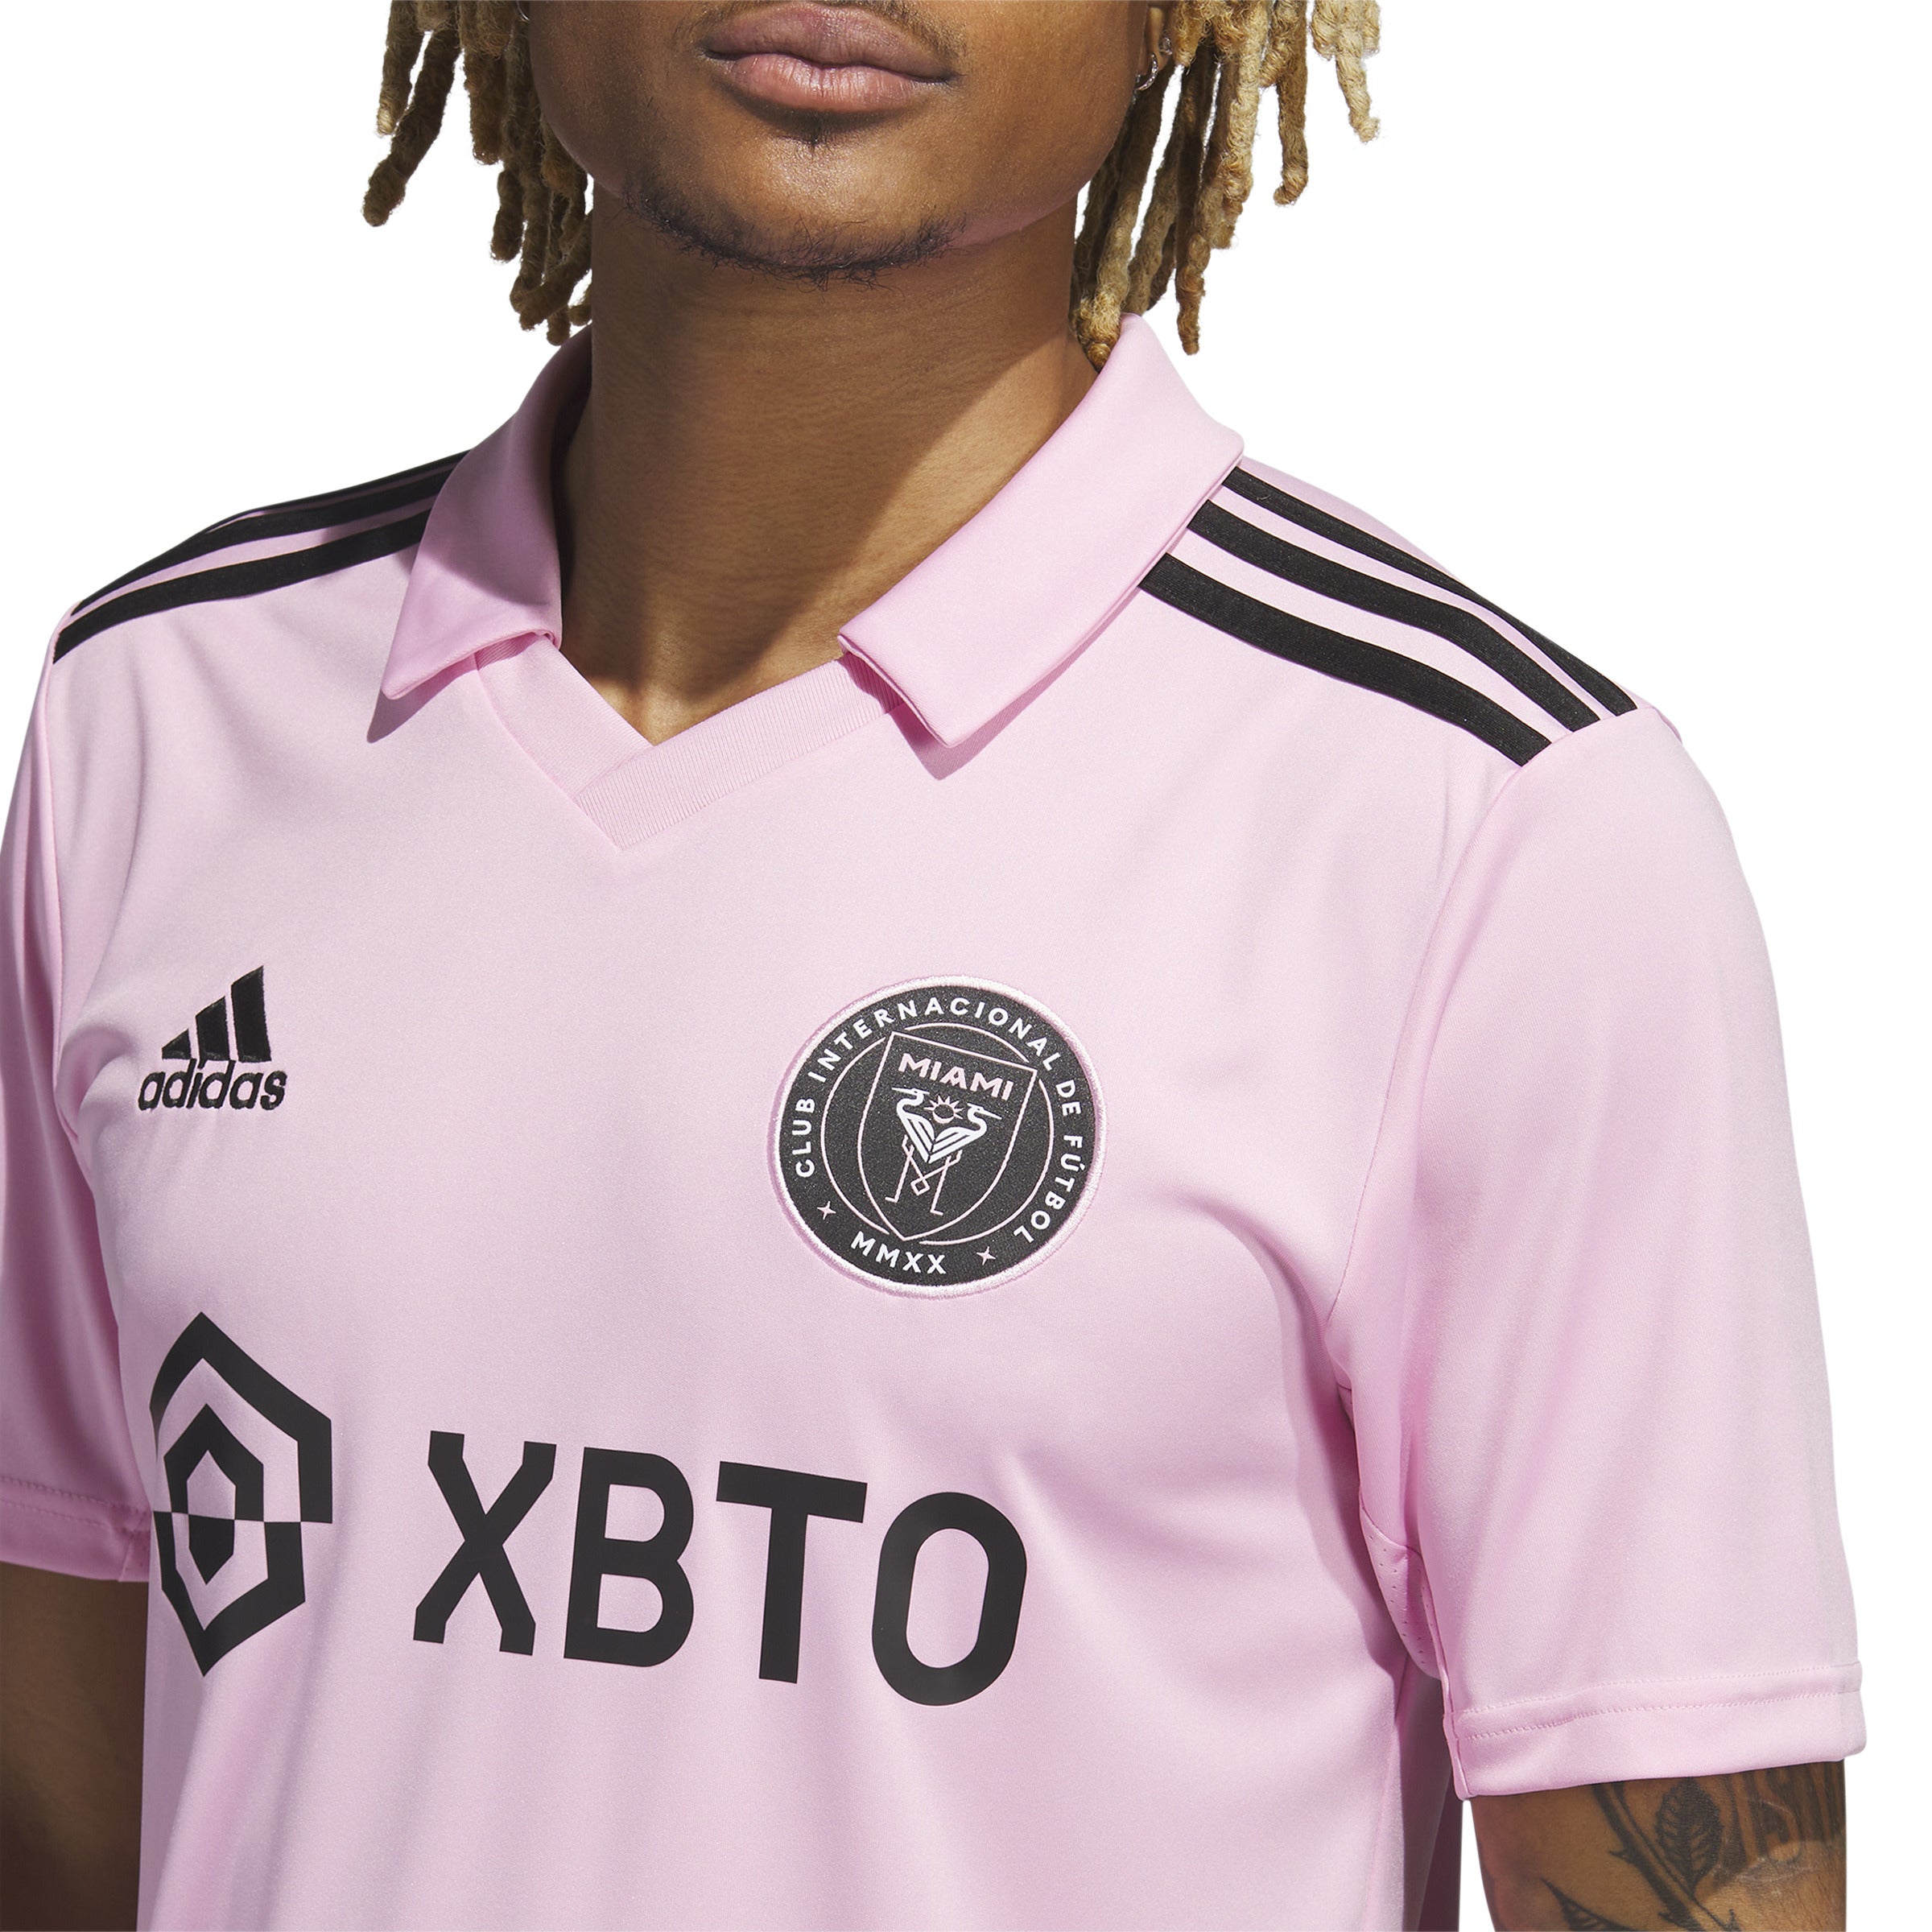 Inter Miami CF adidas MESSI #10 2023 Replica Home Jersey - Pink